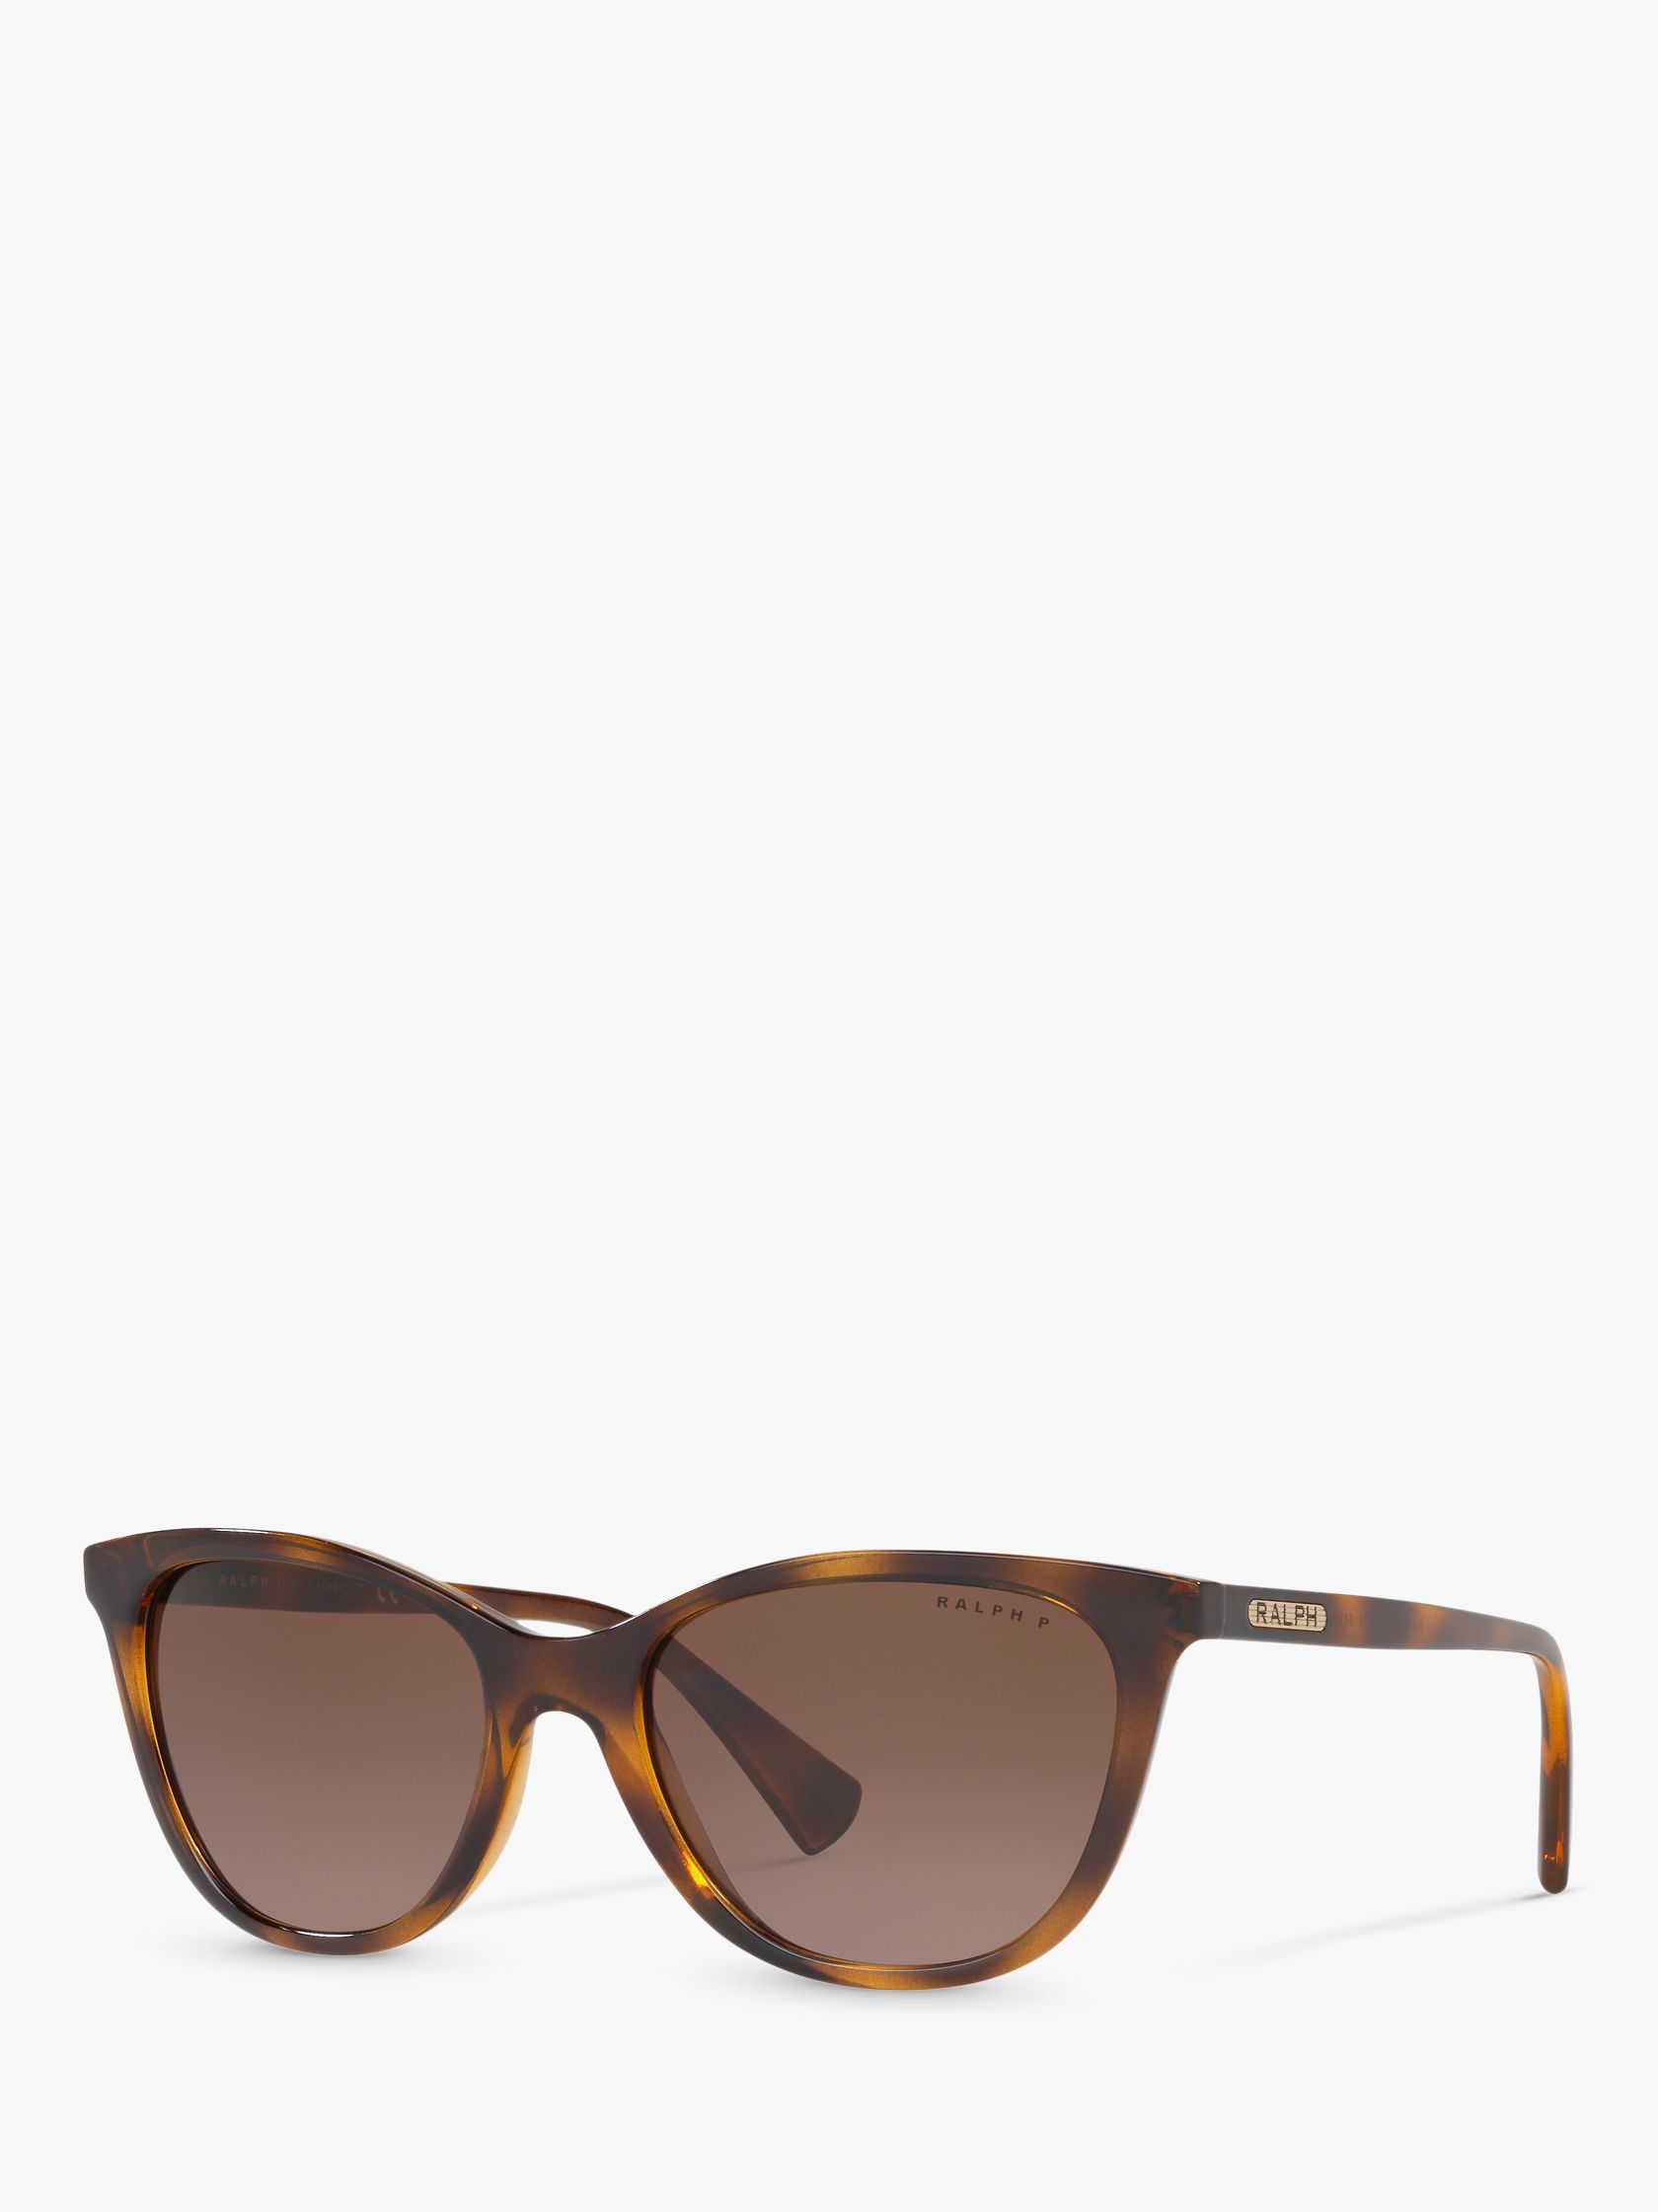 Ralph RA5259 Women's Polarised Oval Sunglasses, Tortoise/Brown Gradient at  John Lewis & Partners